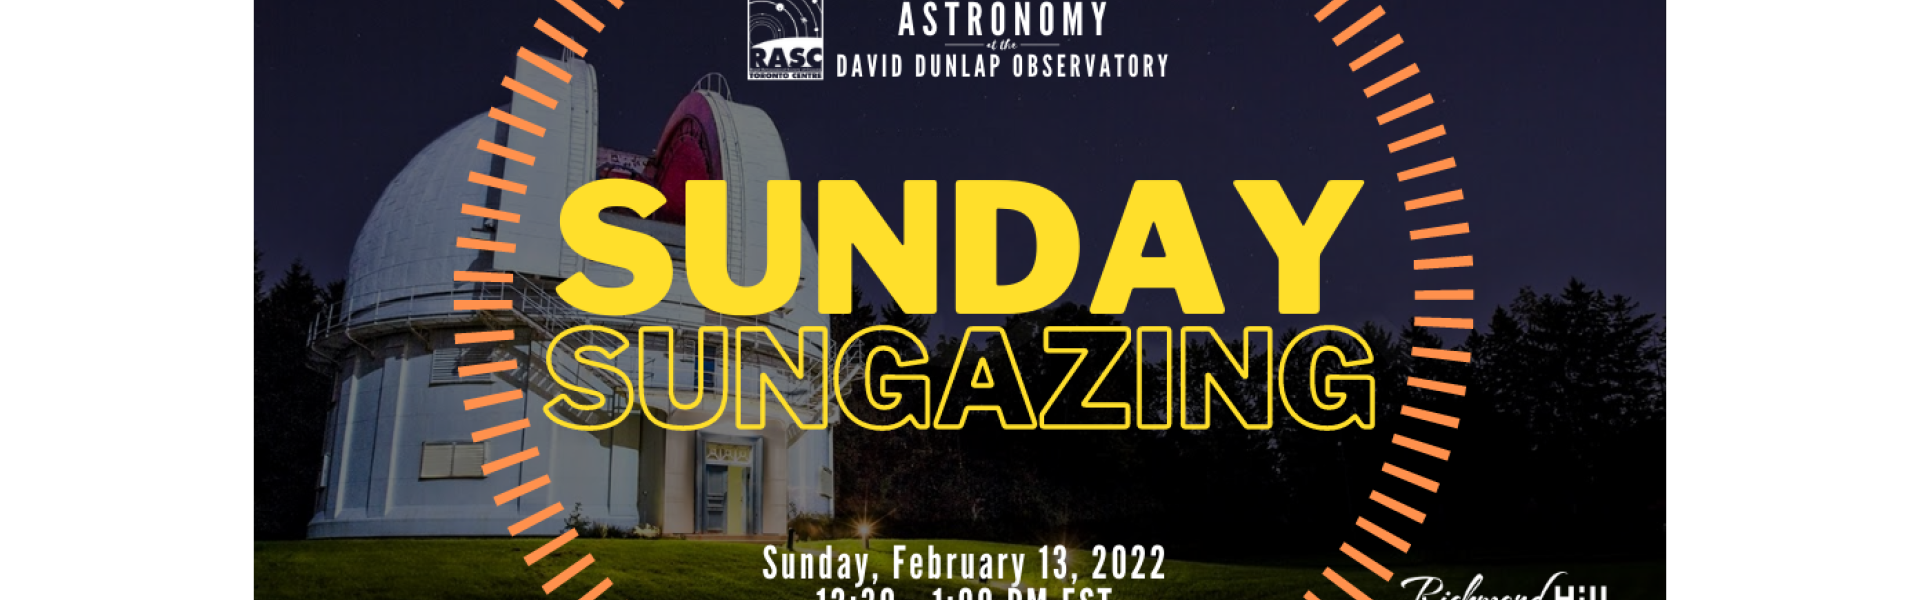 2022-02-13 Sunday Sungazing